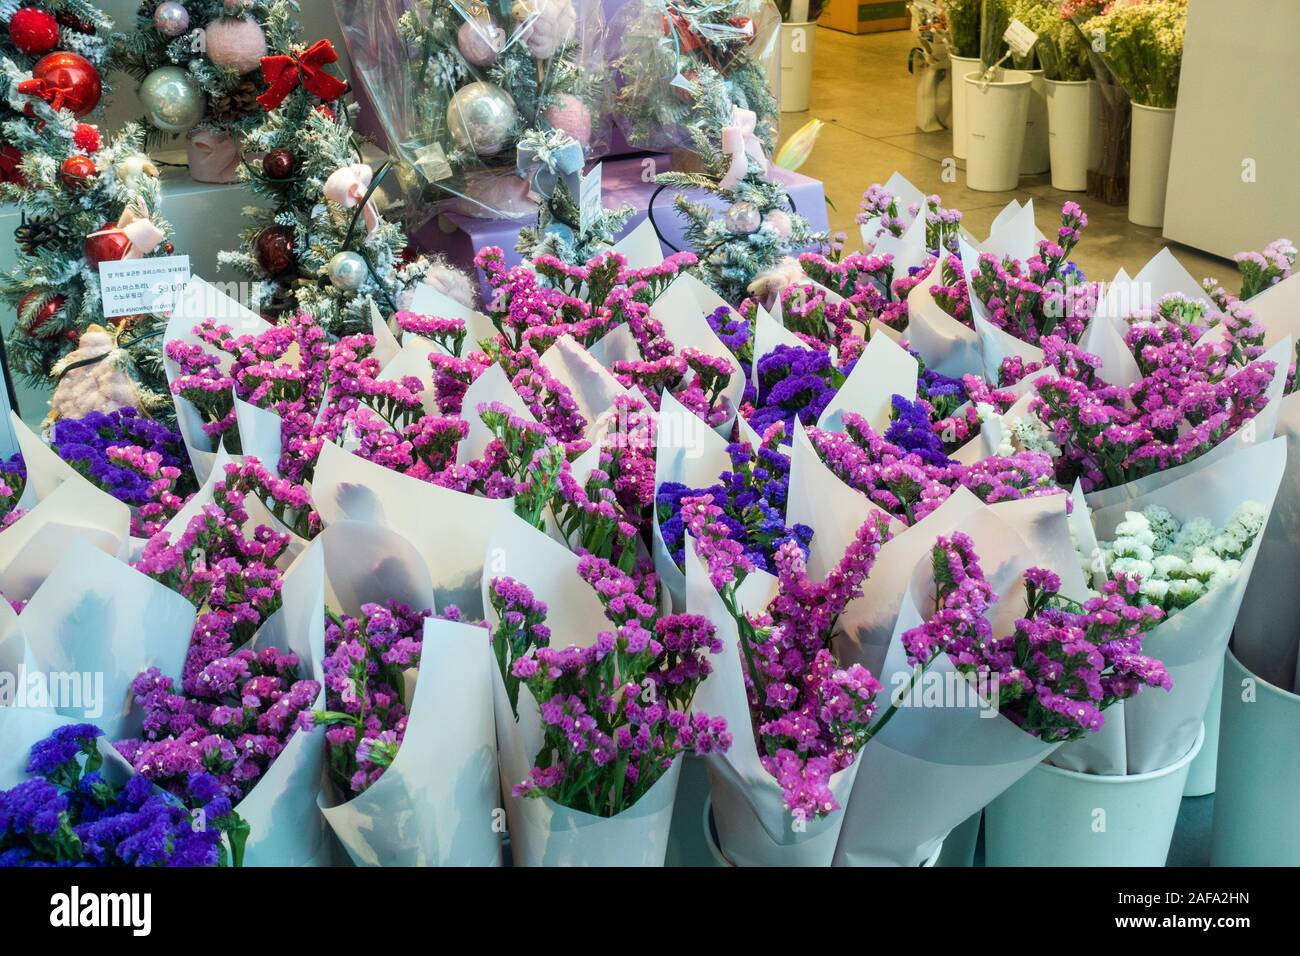 Seoul, South Korea - November 30th, 2019: Flowers shop in Gangnam district. Stock Photo